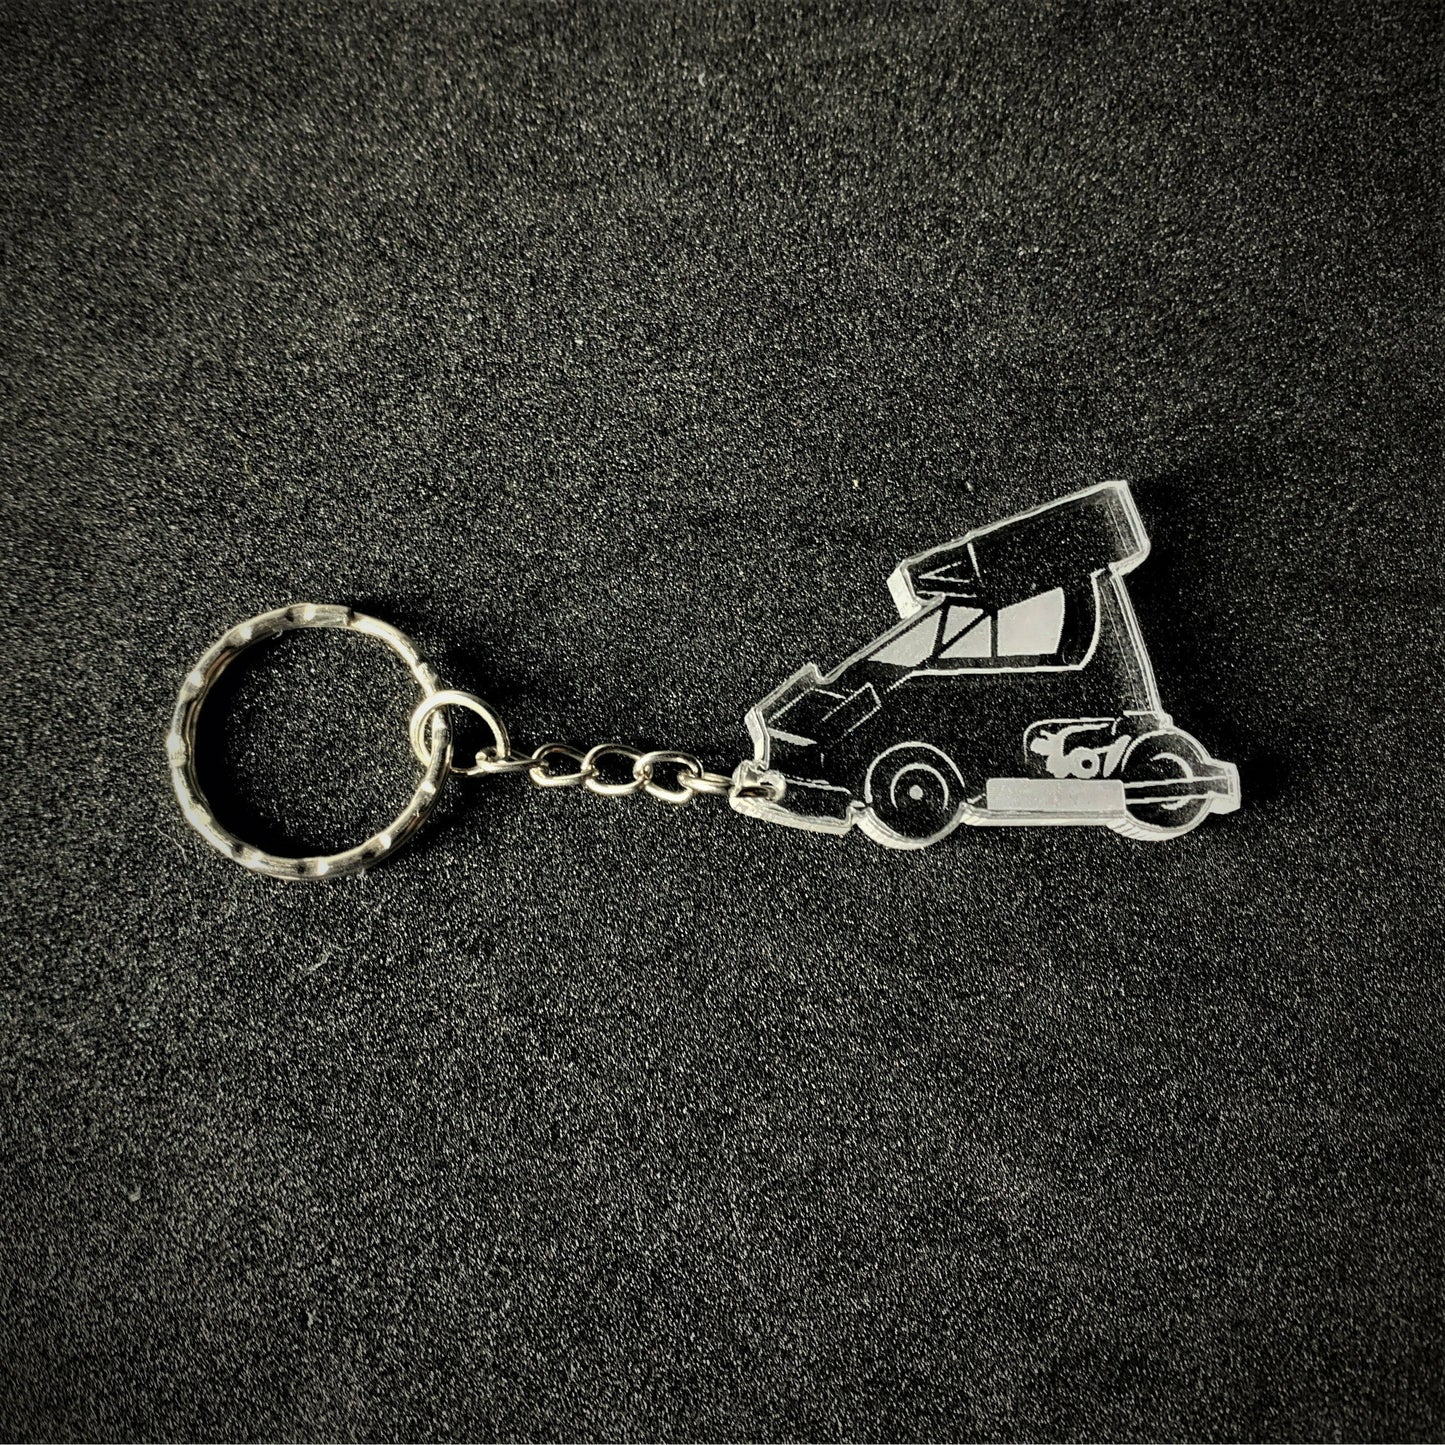 Stoxkart Keyring - Key Ring - Stock Car & Banger Toy Tracks